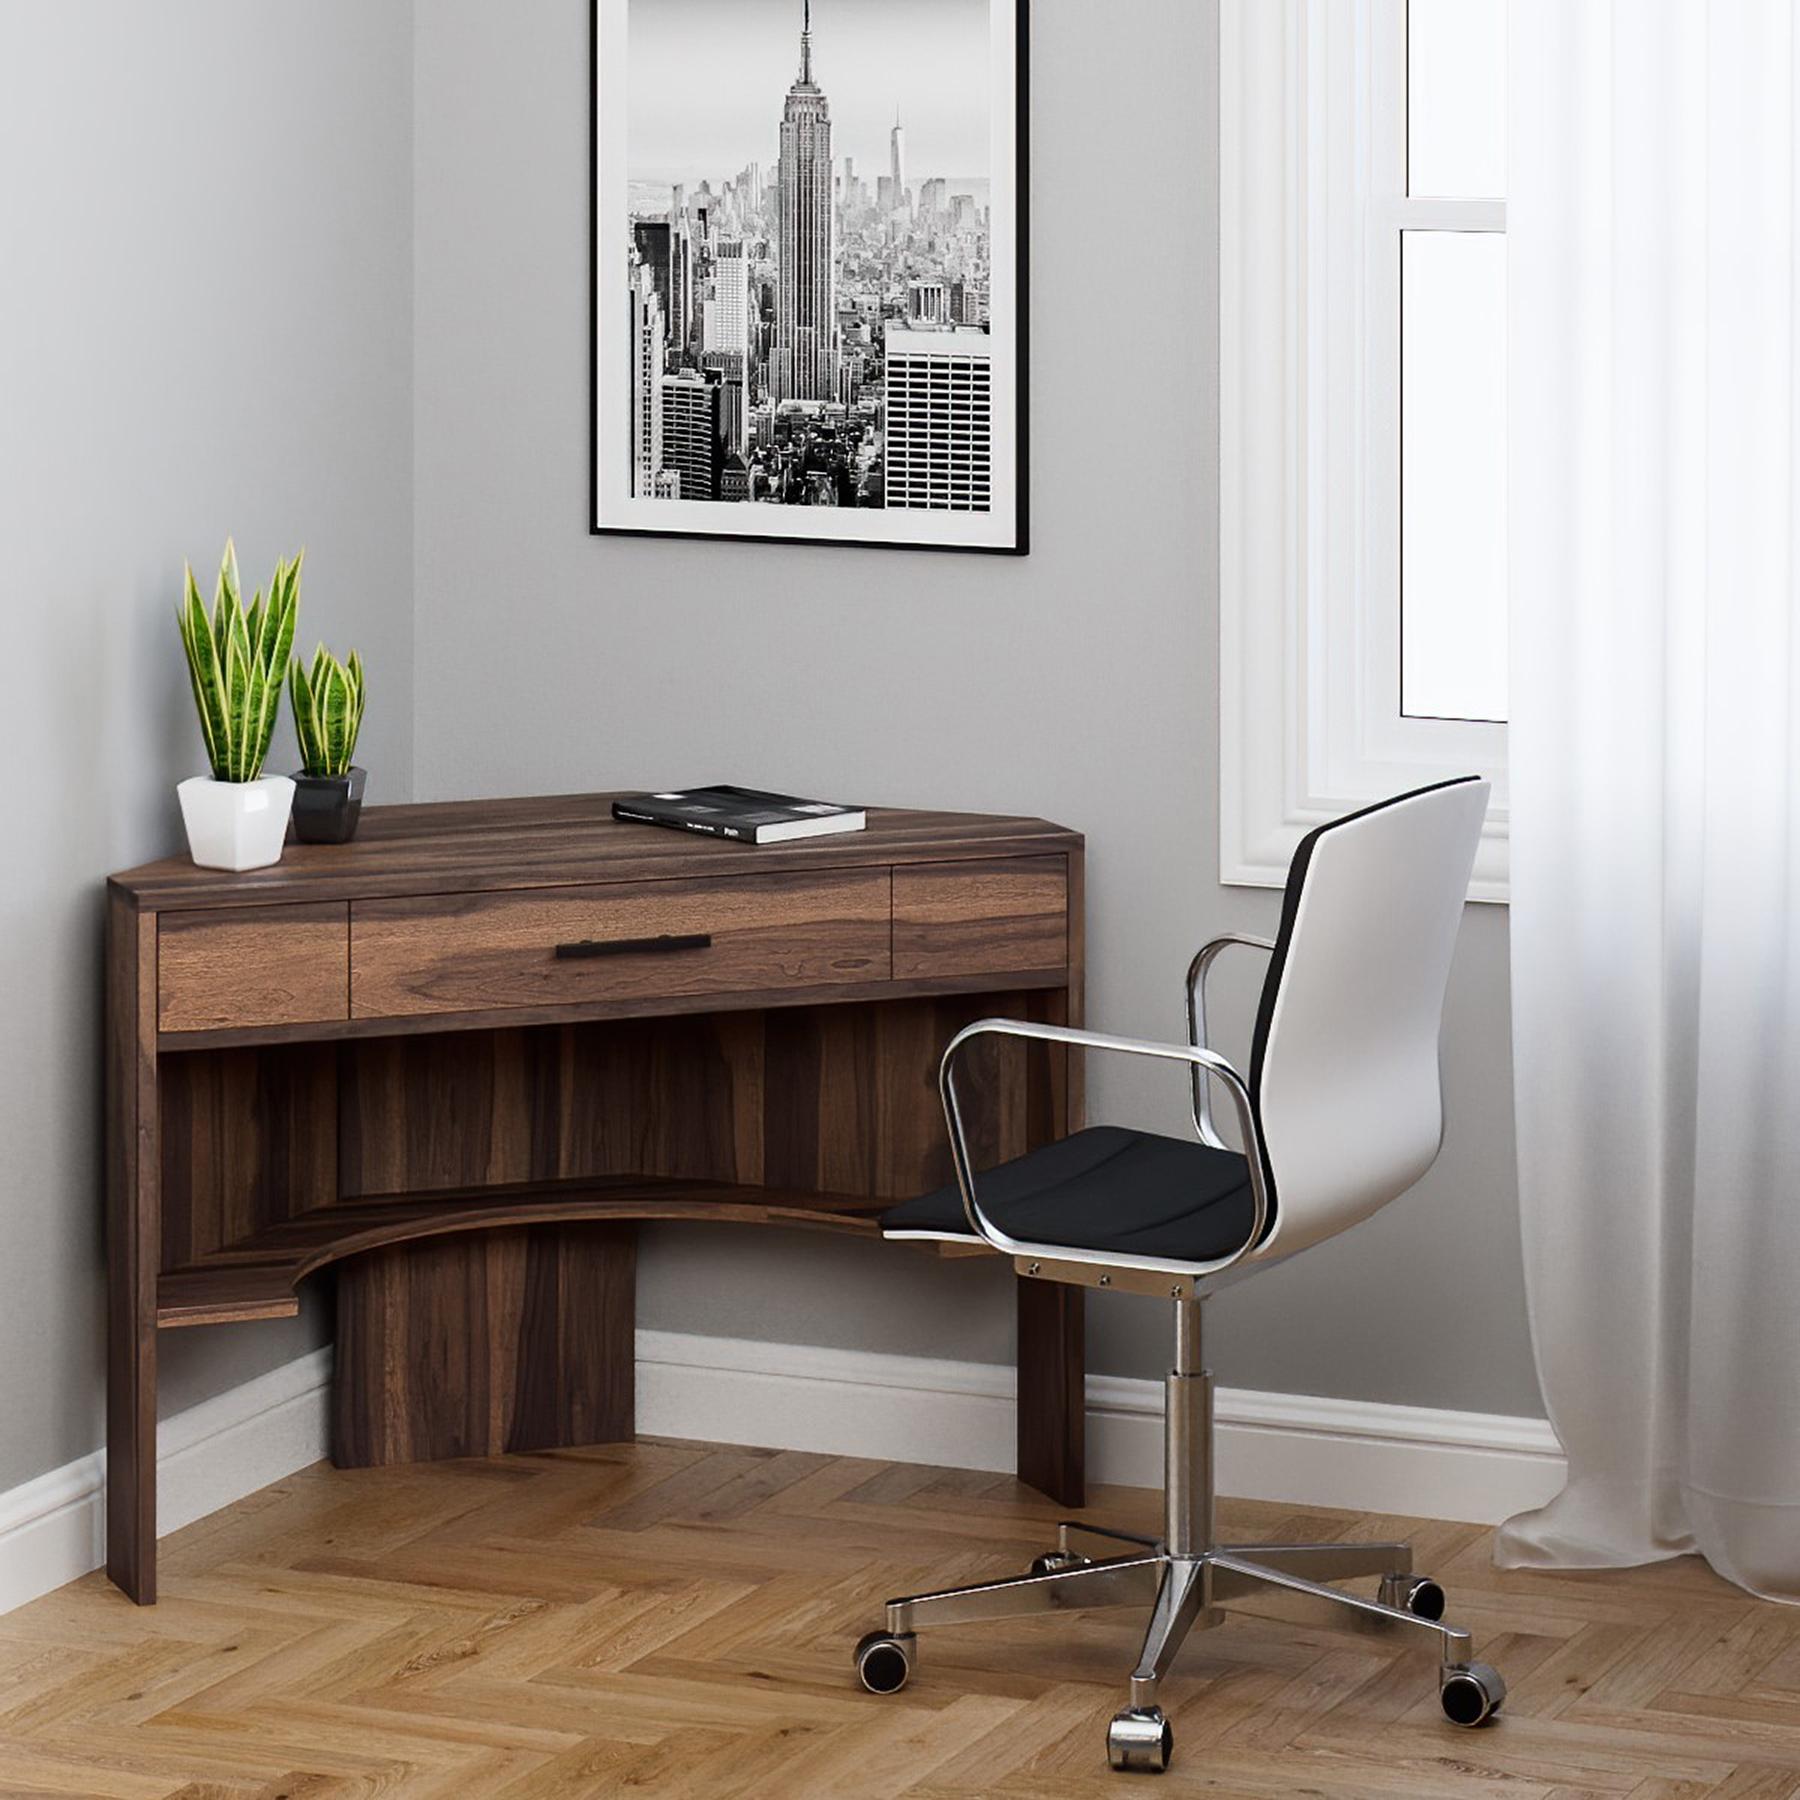 High-tech meets custom home office furniture | Woodworking Network